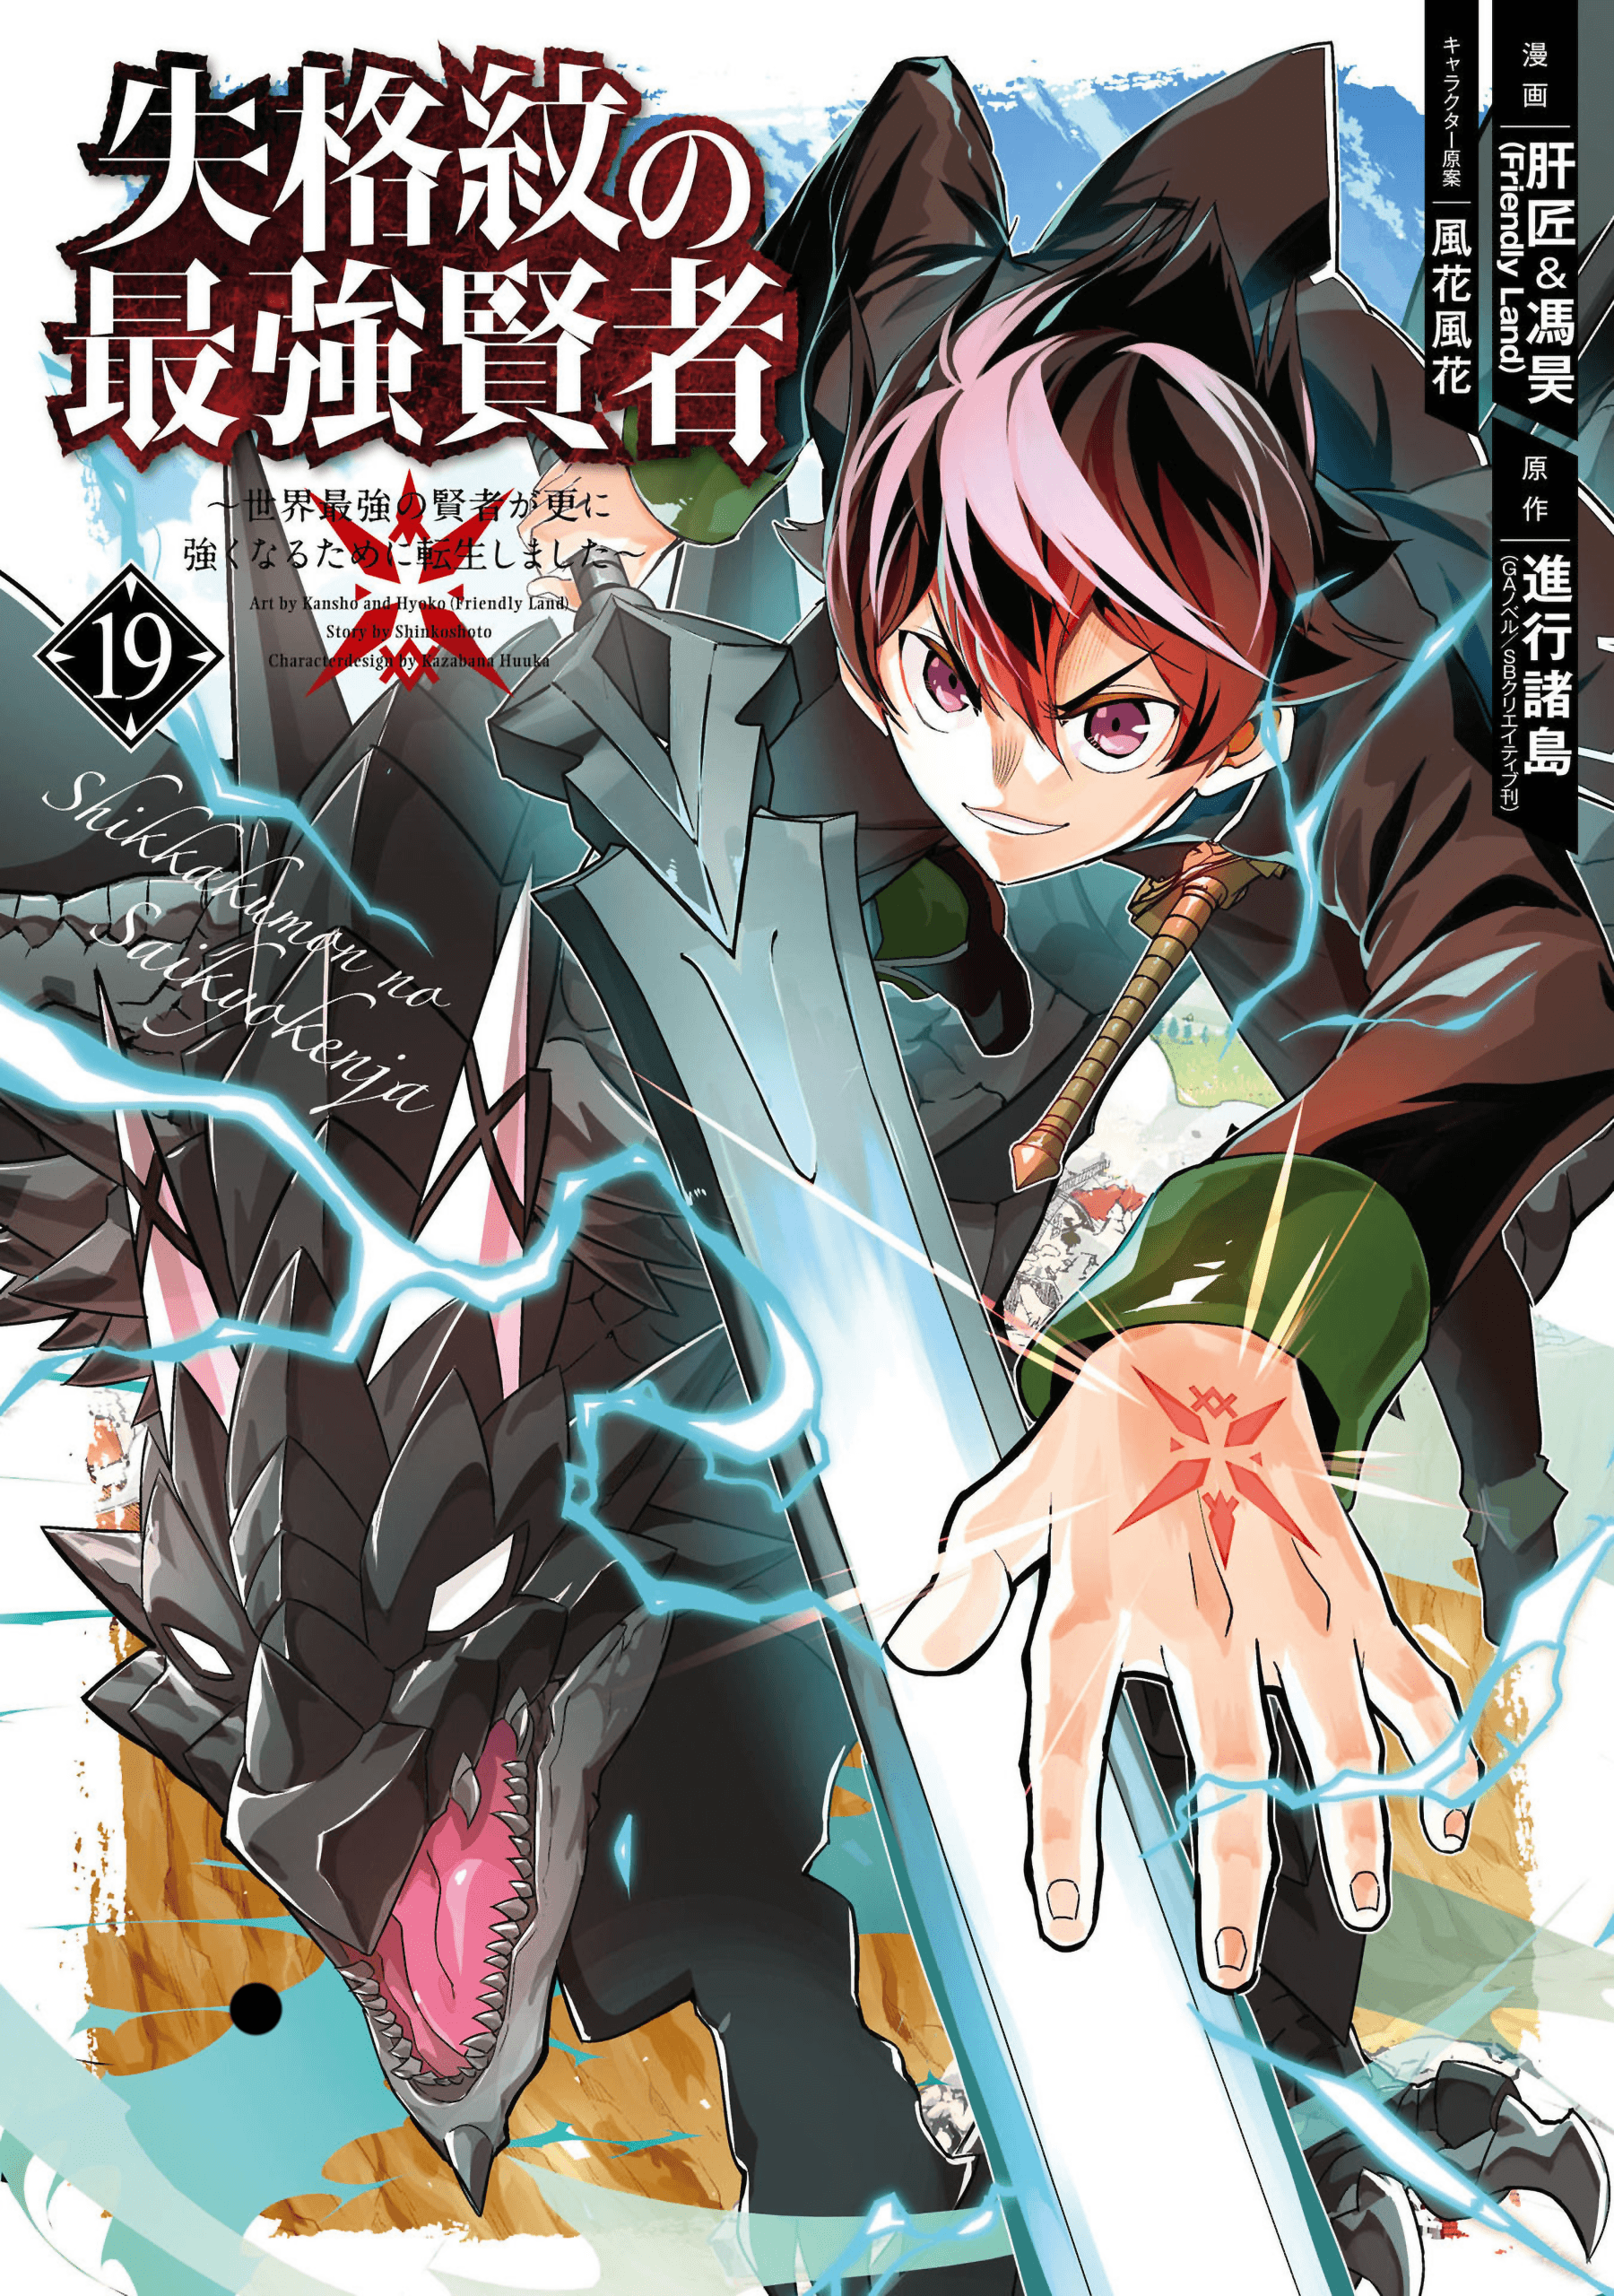 Shikkakumon Light Novel Volume 01, Saikyou Kenja Wiki